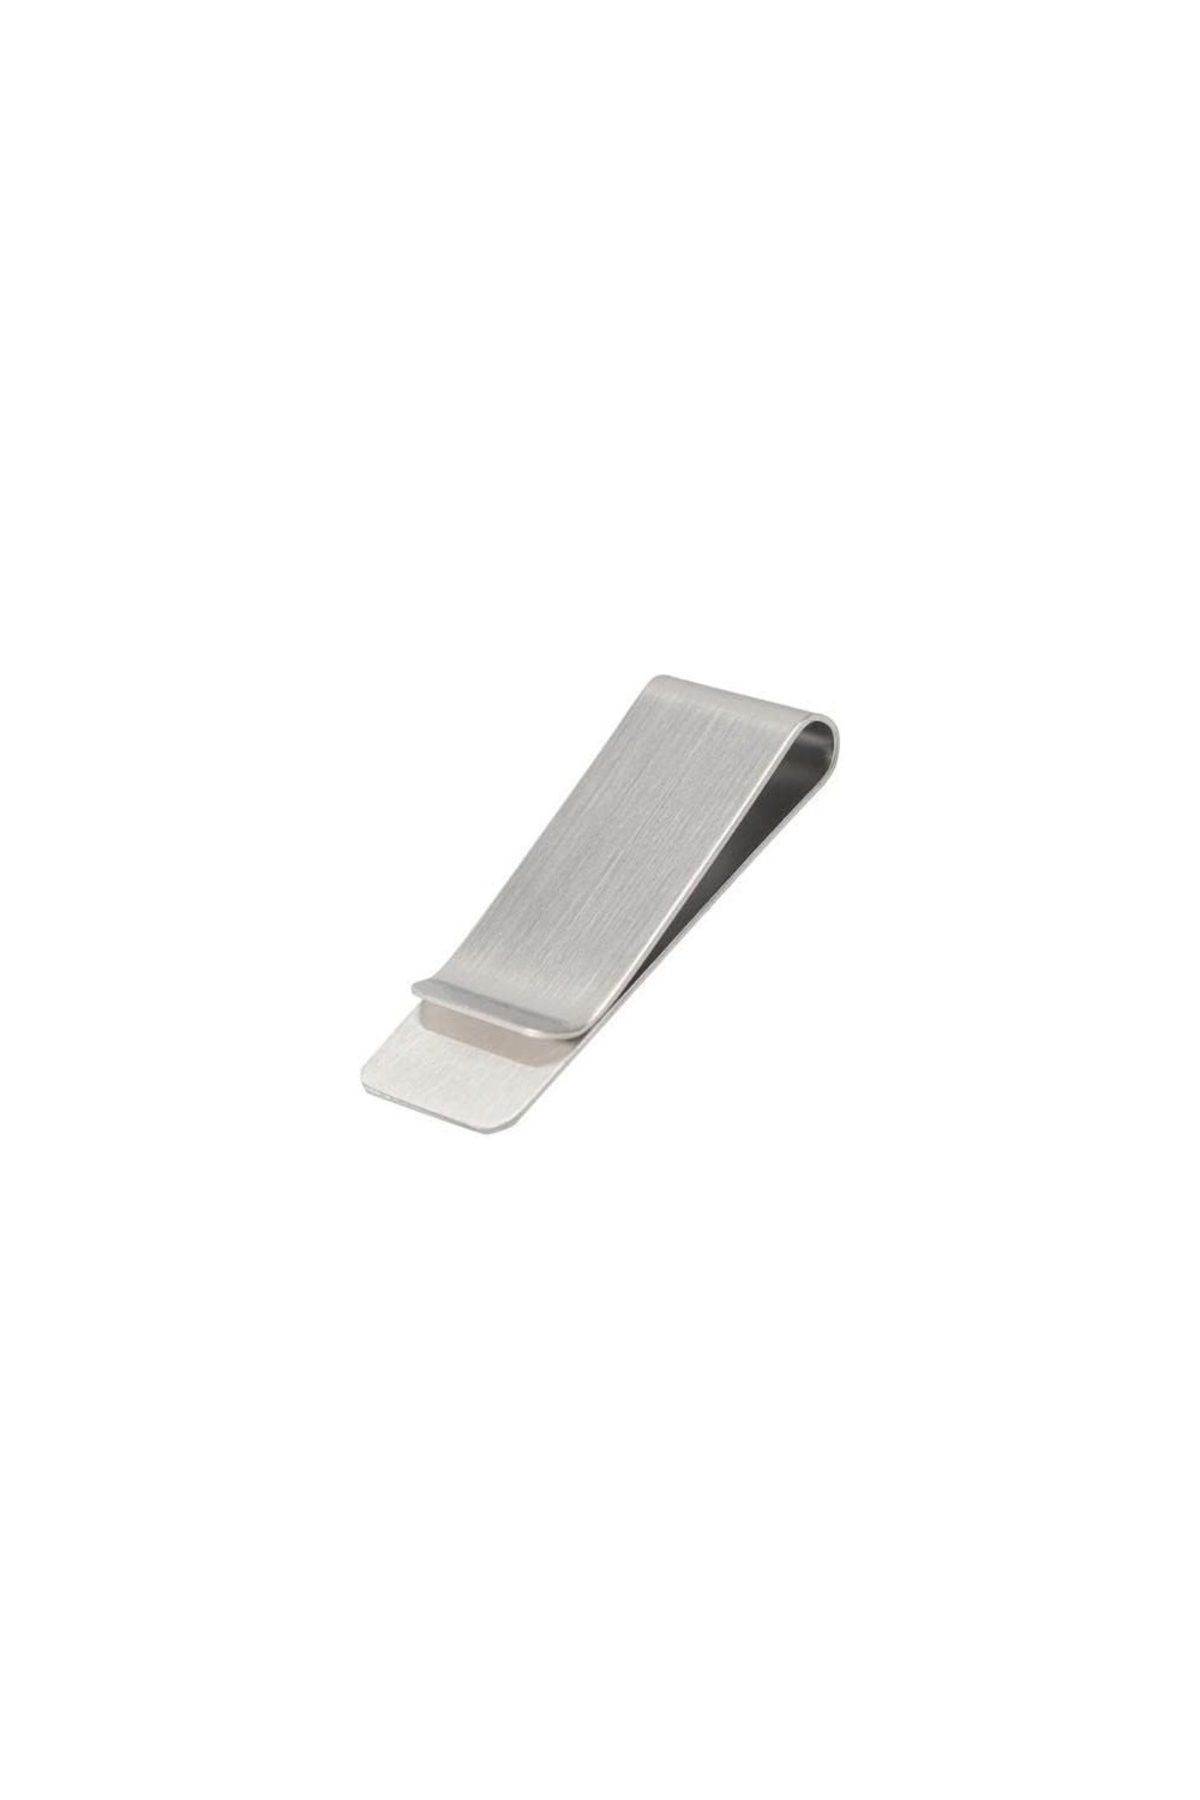 Spelt Metal Kağıt Para Tokası Kart Tutucu Klips Cüzdan Ataş Gümüş 5cm X 1,5cm Küçük Boy